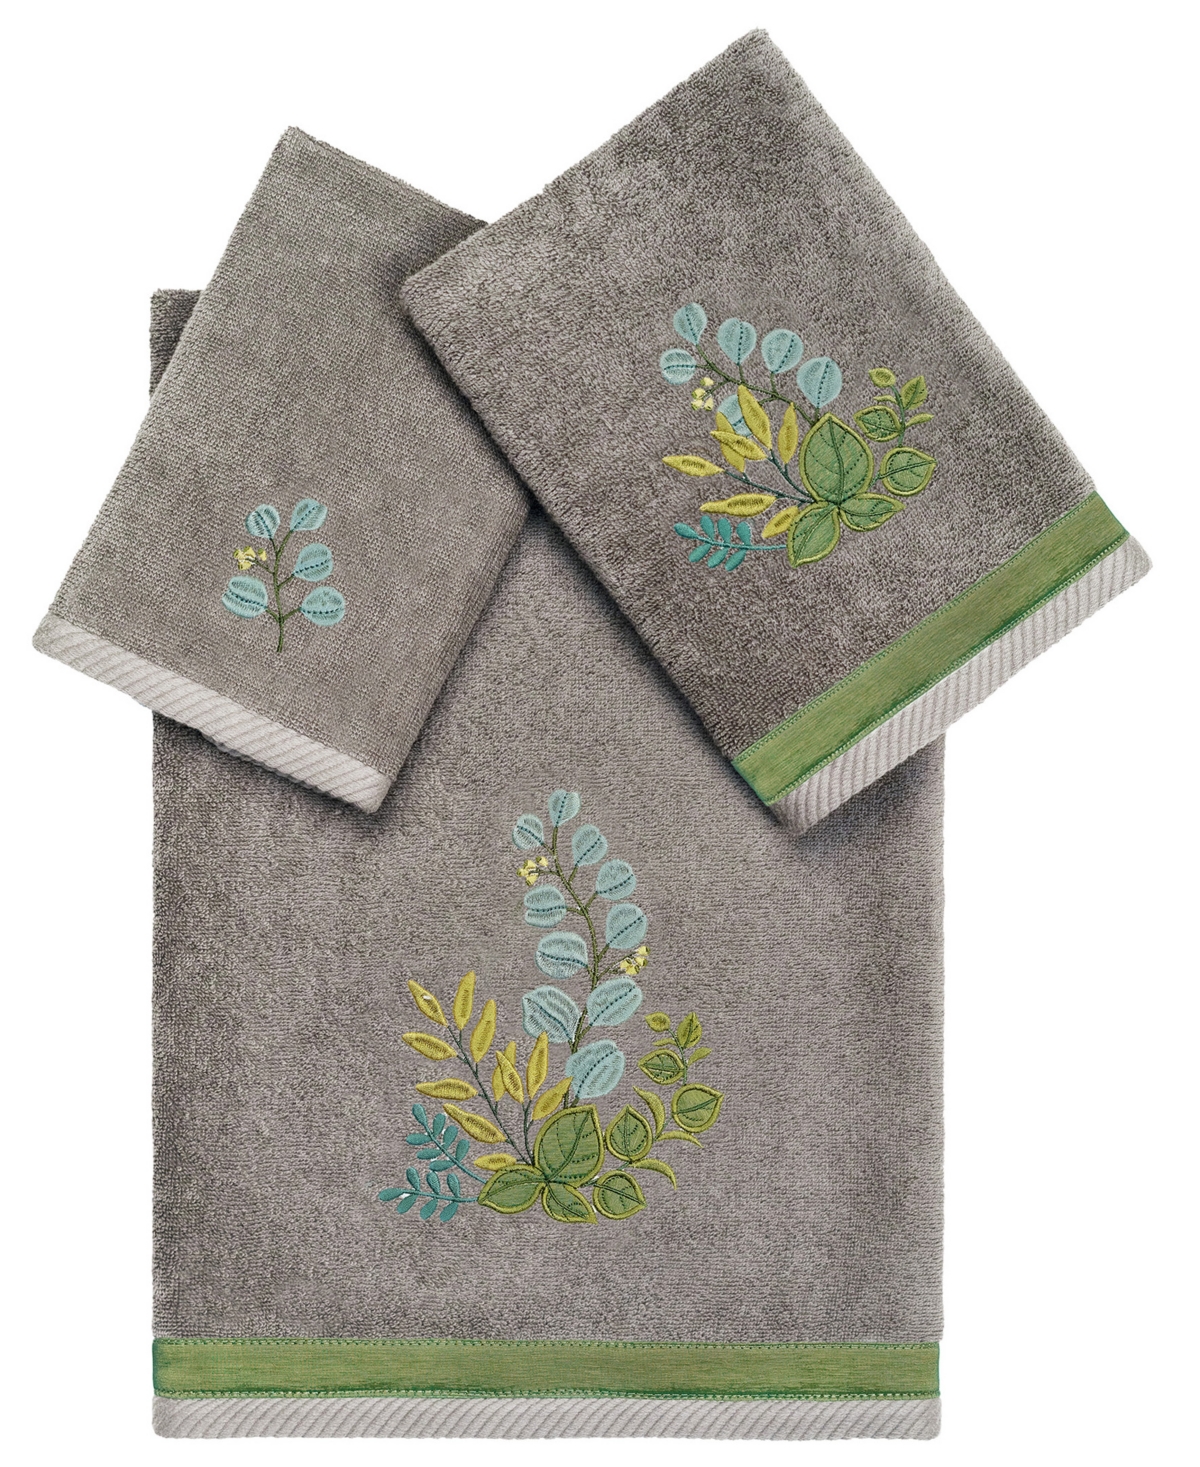 Linum Home Textiles Turkish Cotton Botanica Embellished Towel Set, 3 Piece Bedding In Charcoal